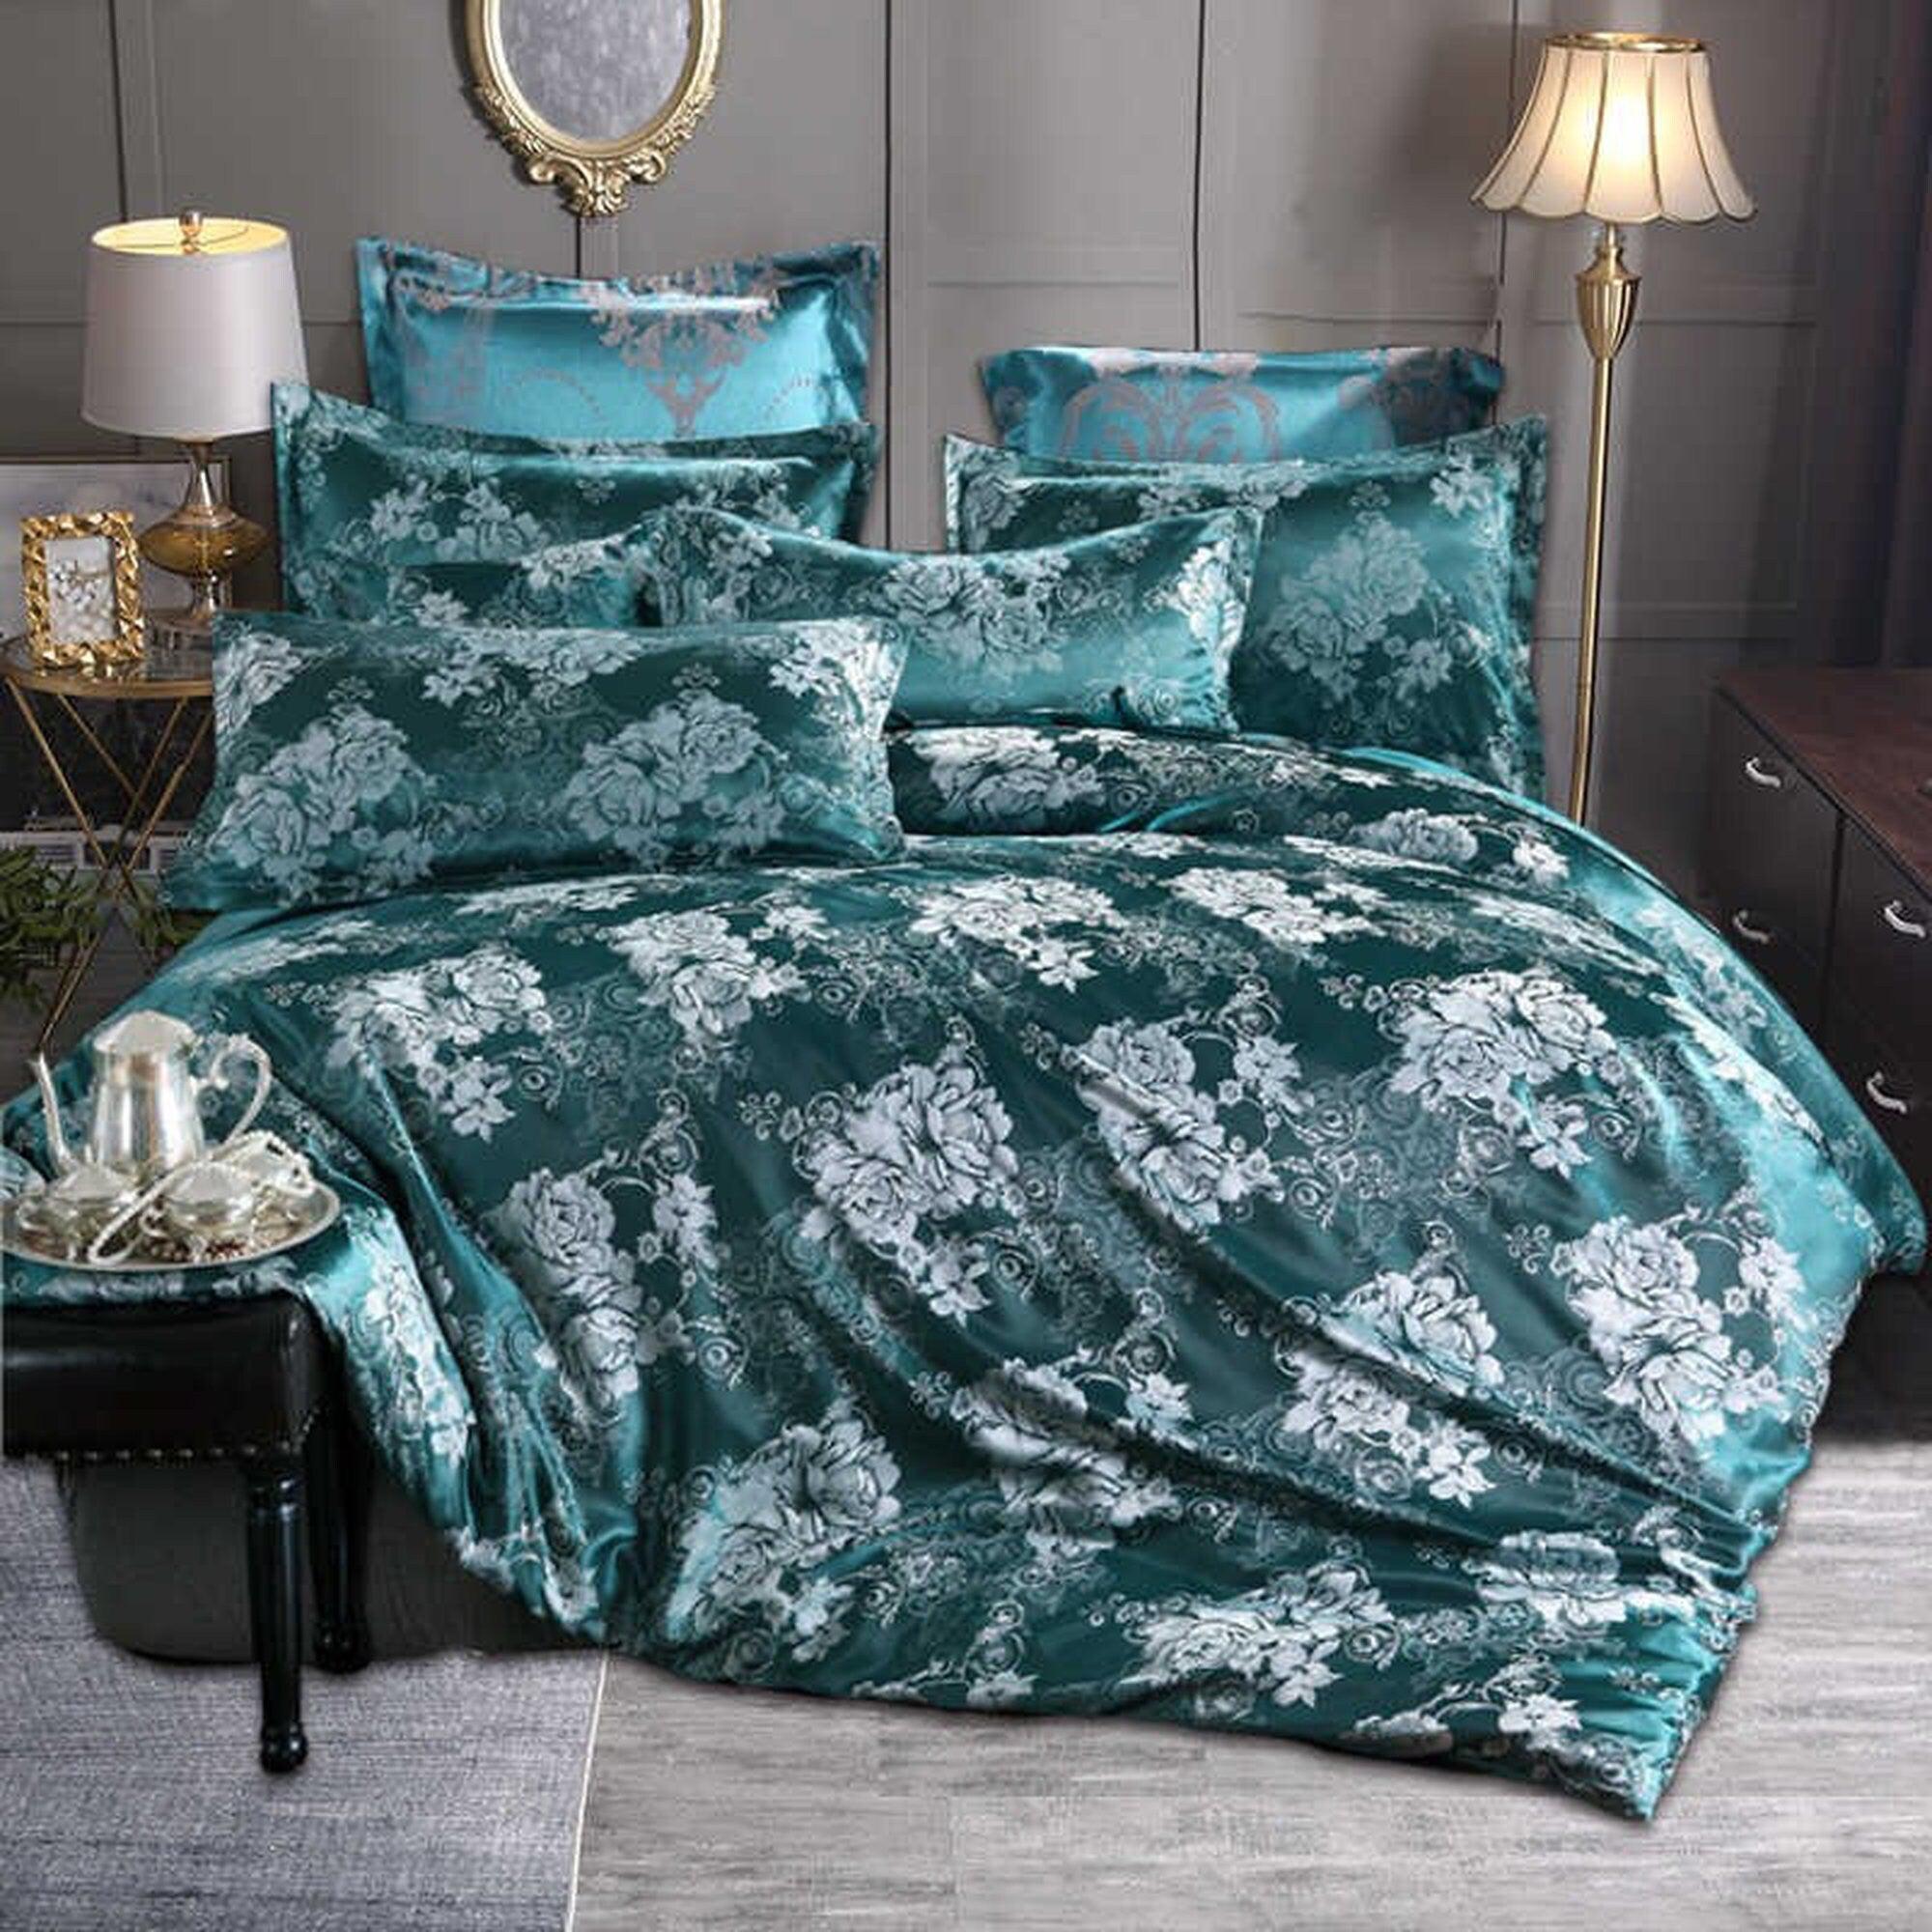 daintyduvet Luxury Emerald Green Bedding made with Silky Jacquard Fabric, Damask Duvet Cover Set, Designer Bedding, Aesthetic Duvet King Queen Full Twin